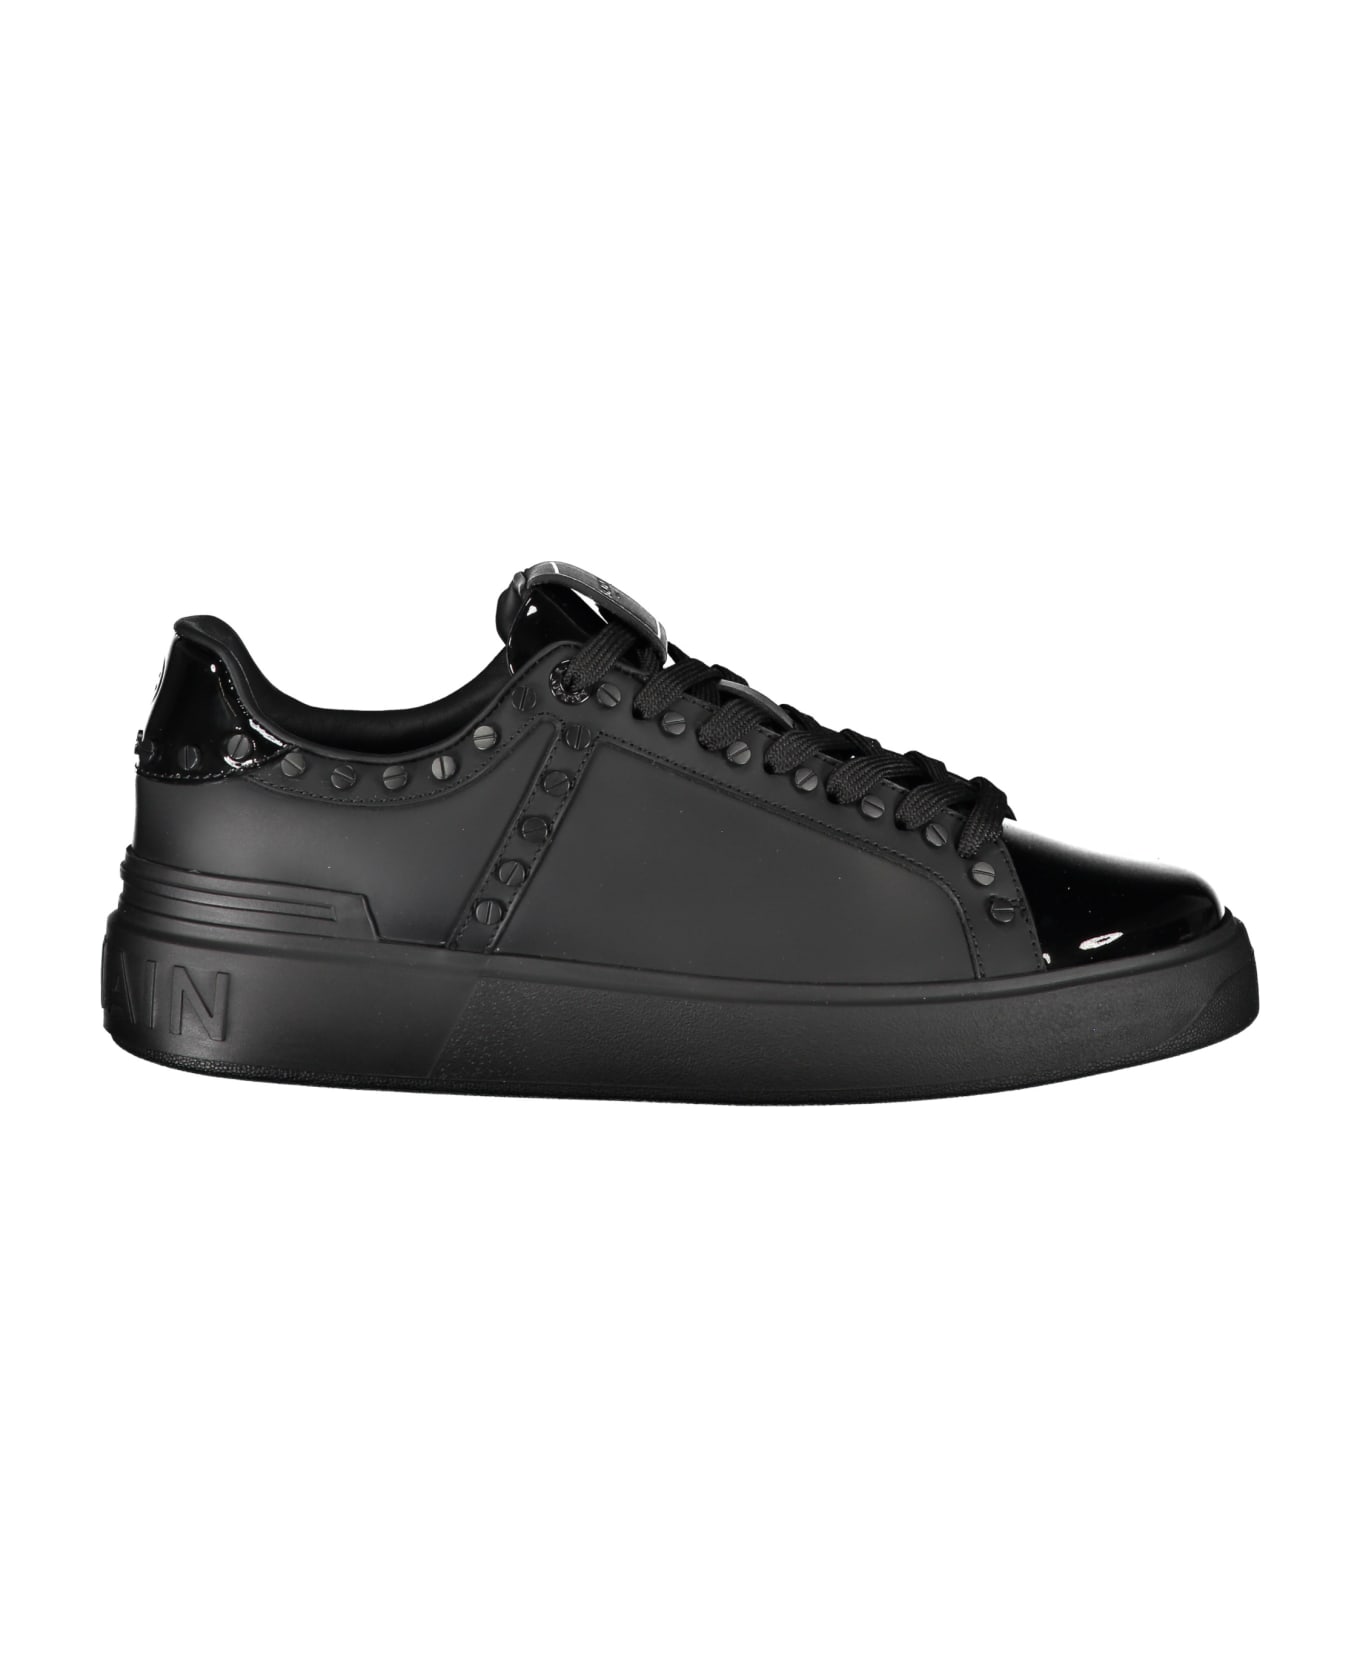 Balmain Leather Sneakers - black